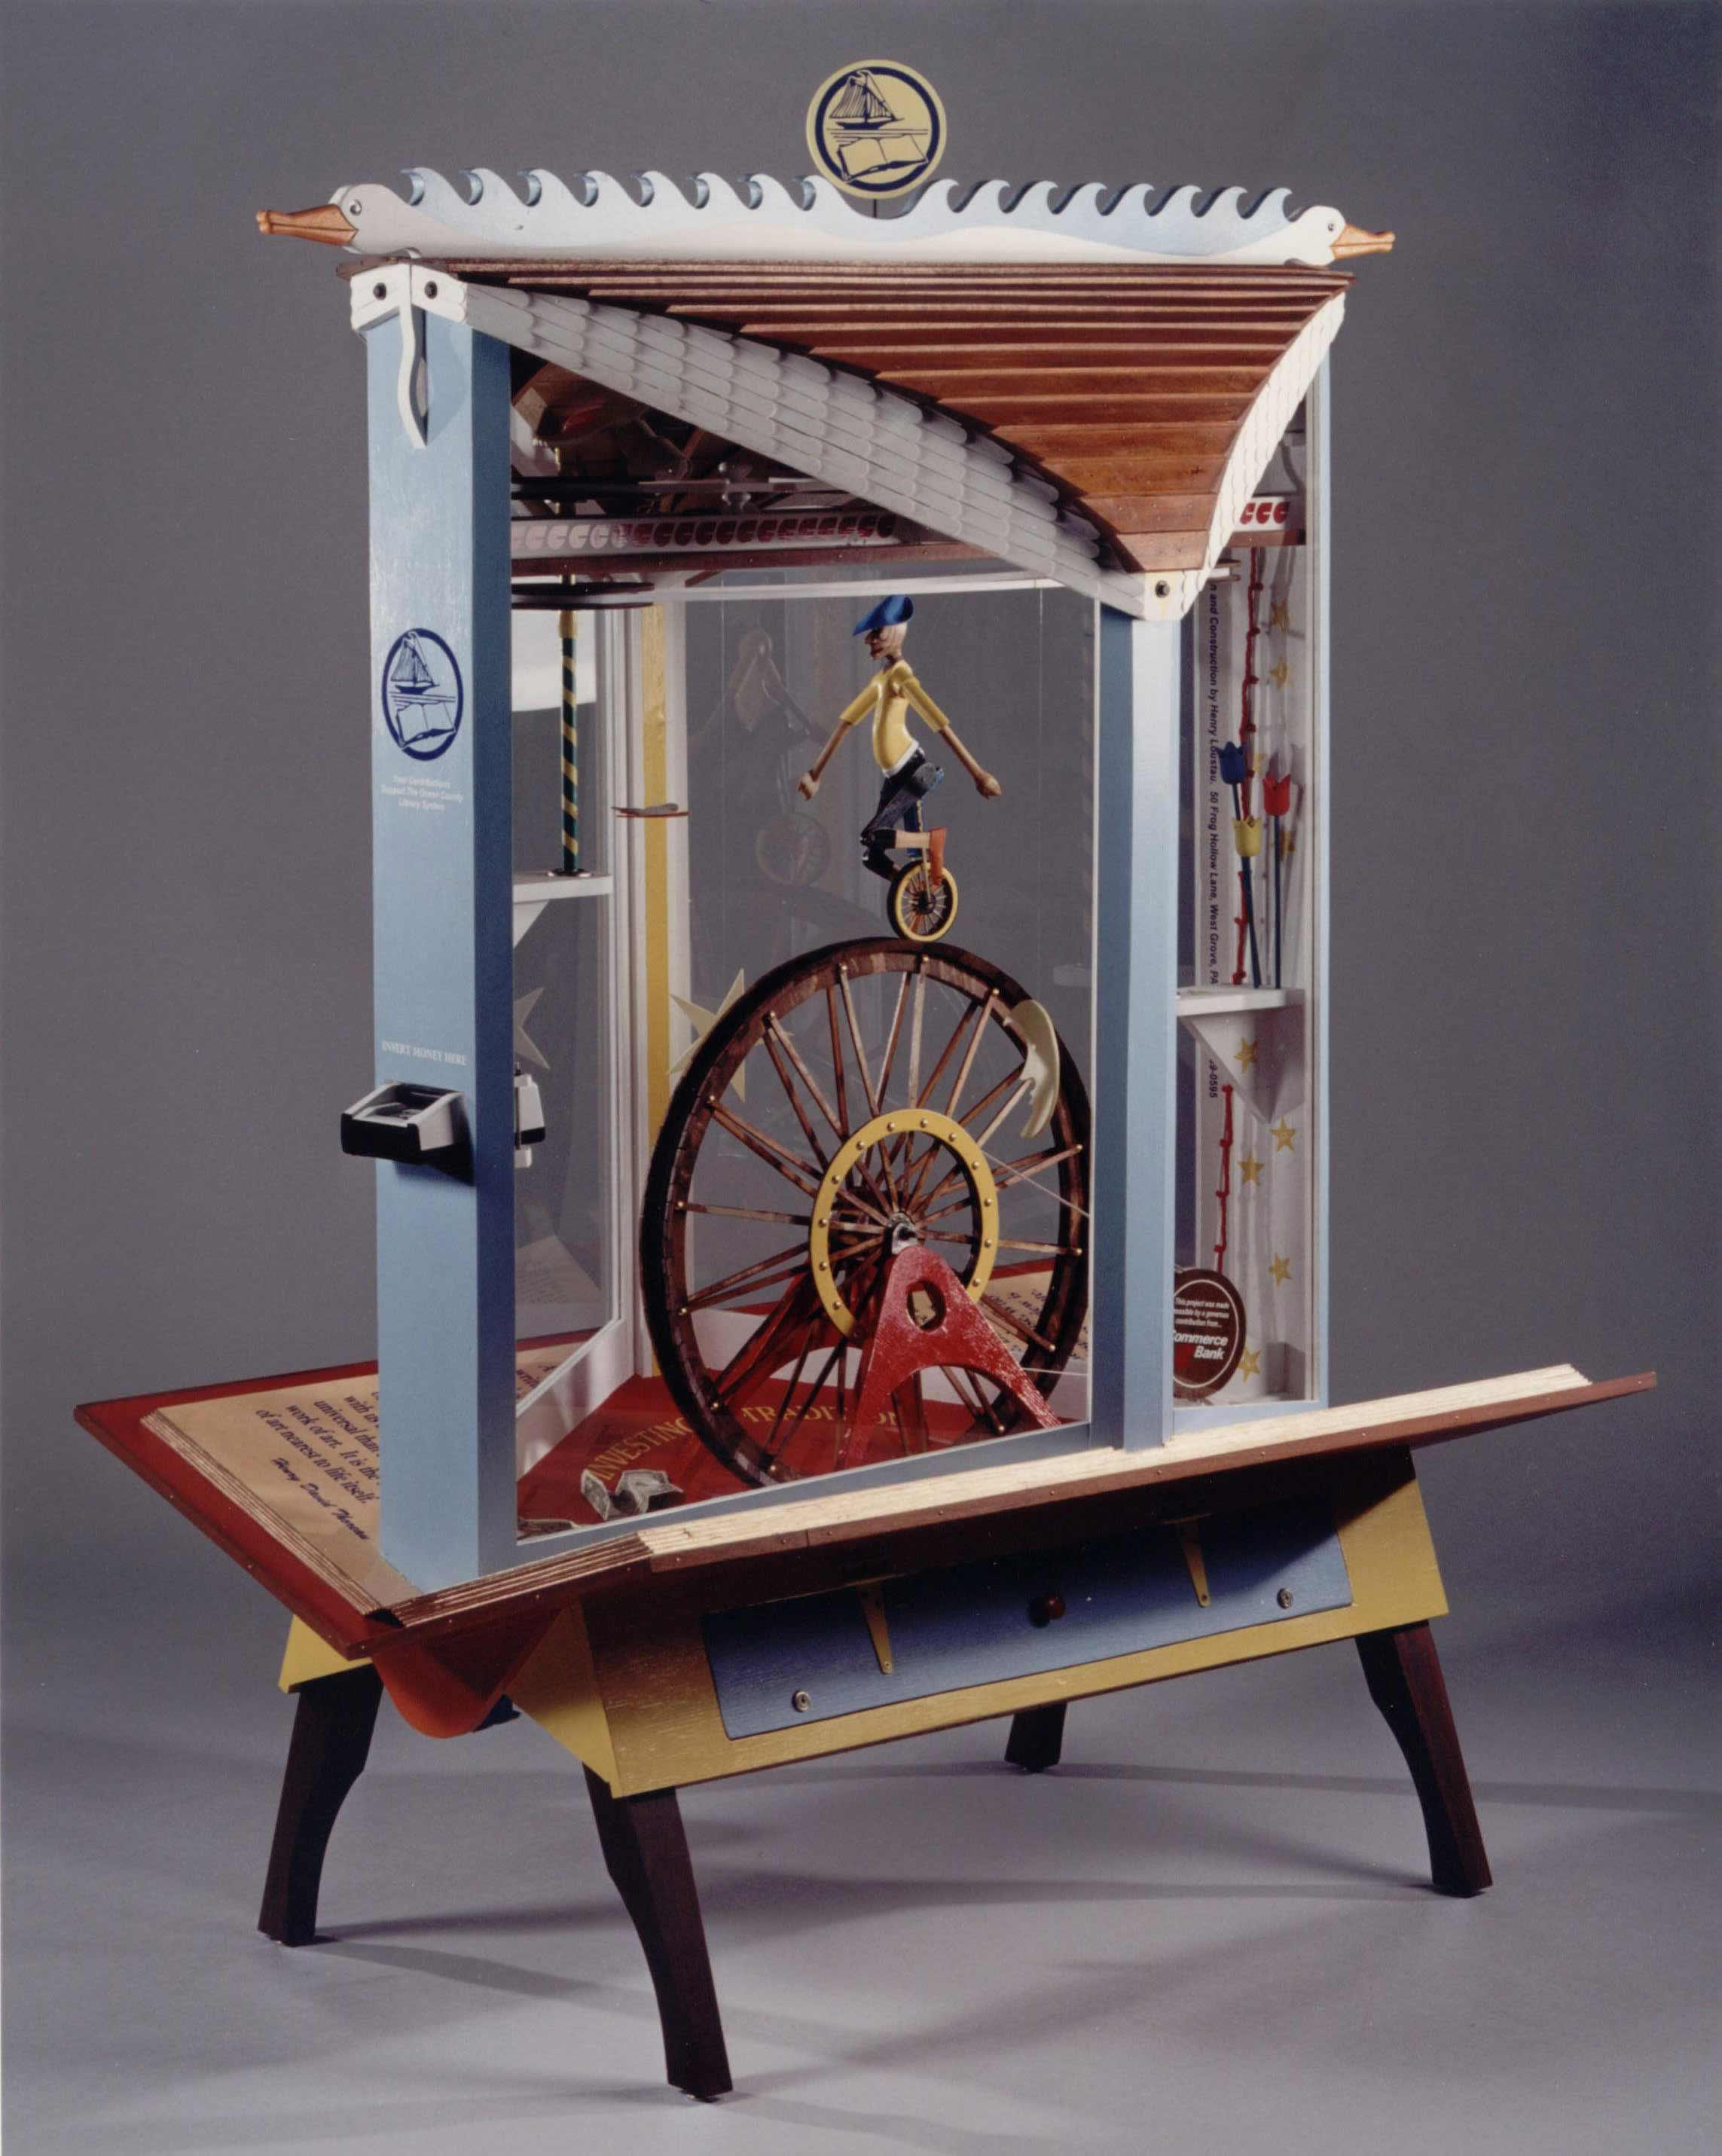 Henry Loustau's kinetic contribution machine, "Working Bank"